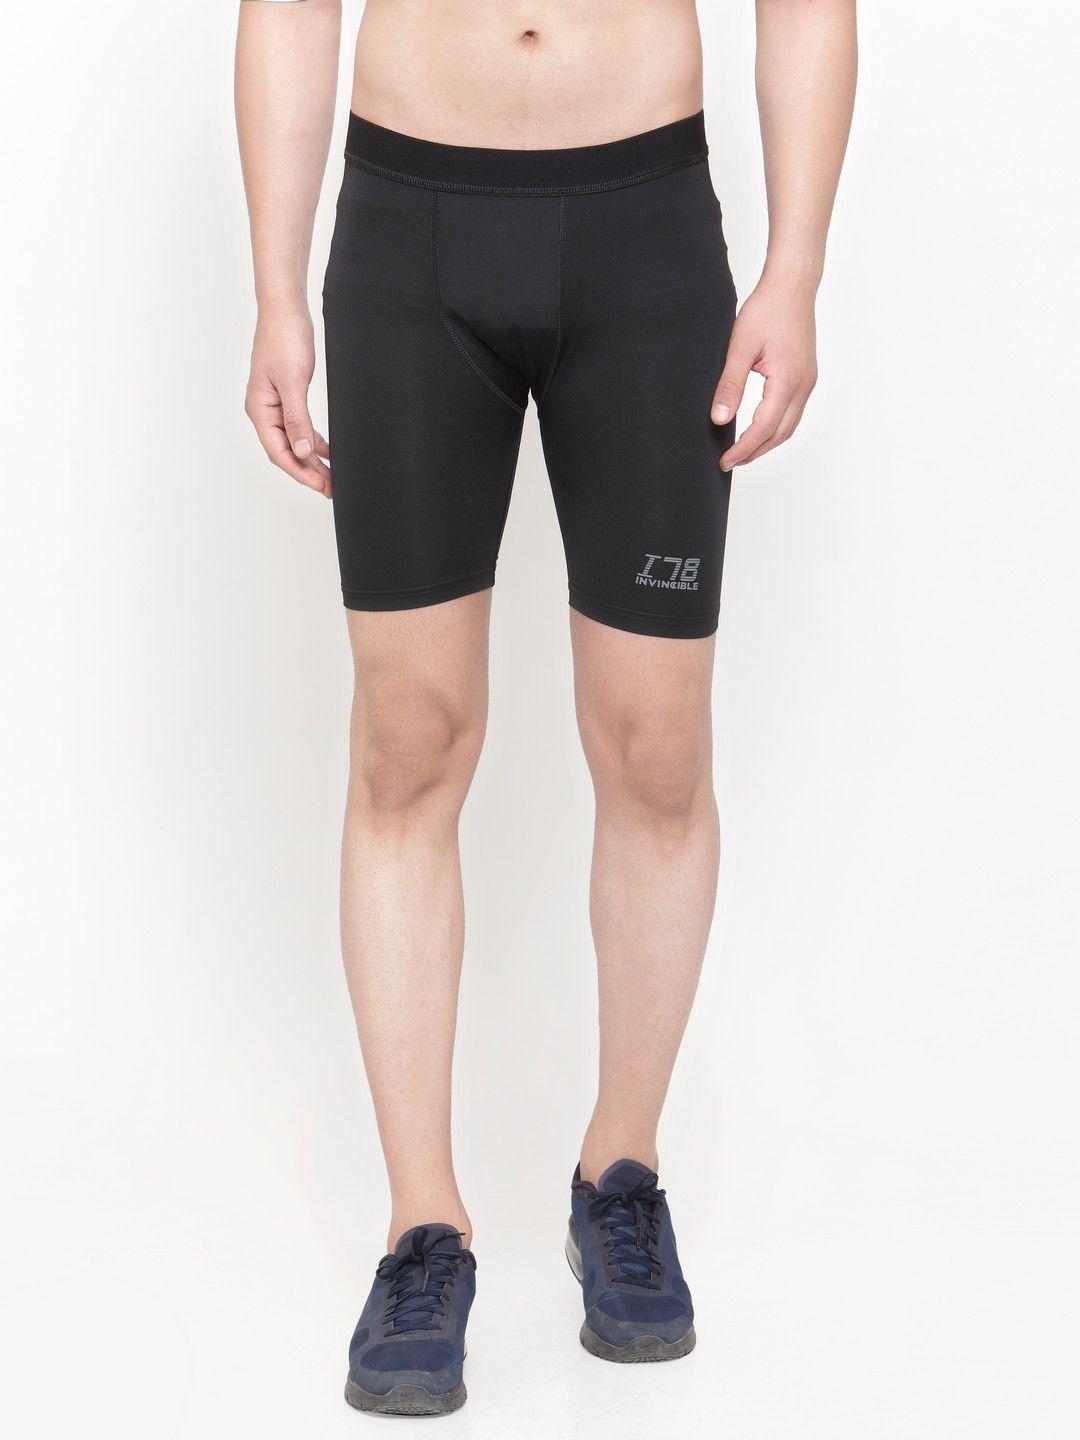 invincible men black solid slim fit compression base layer shorts